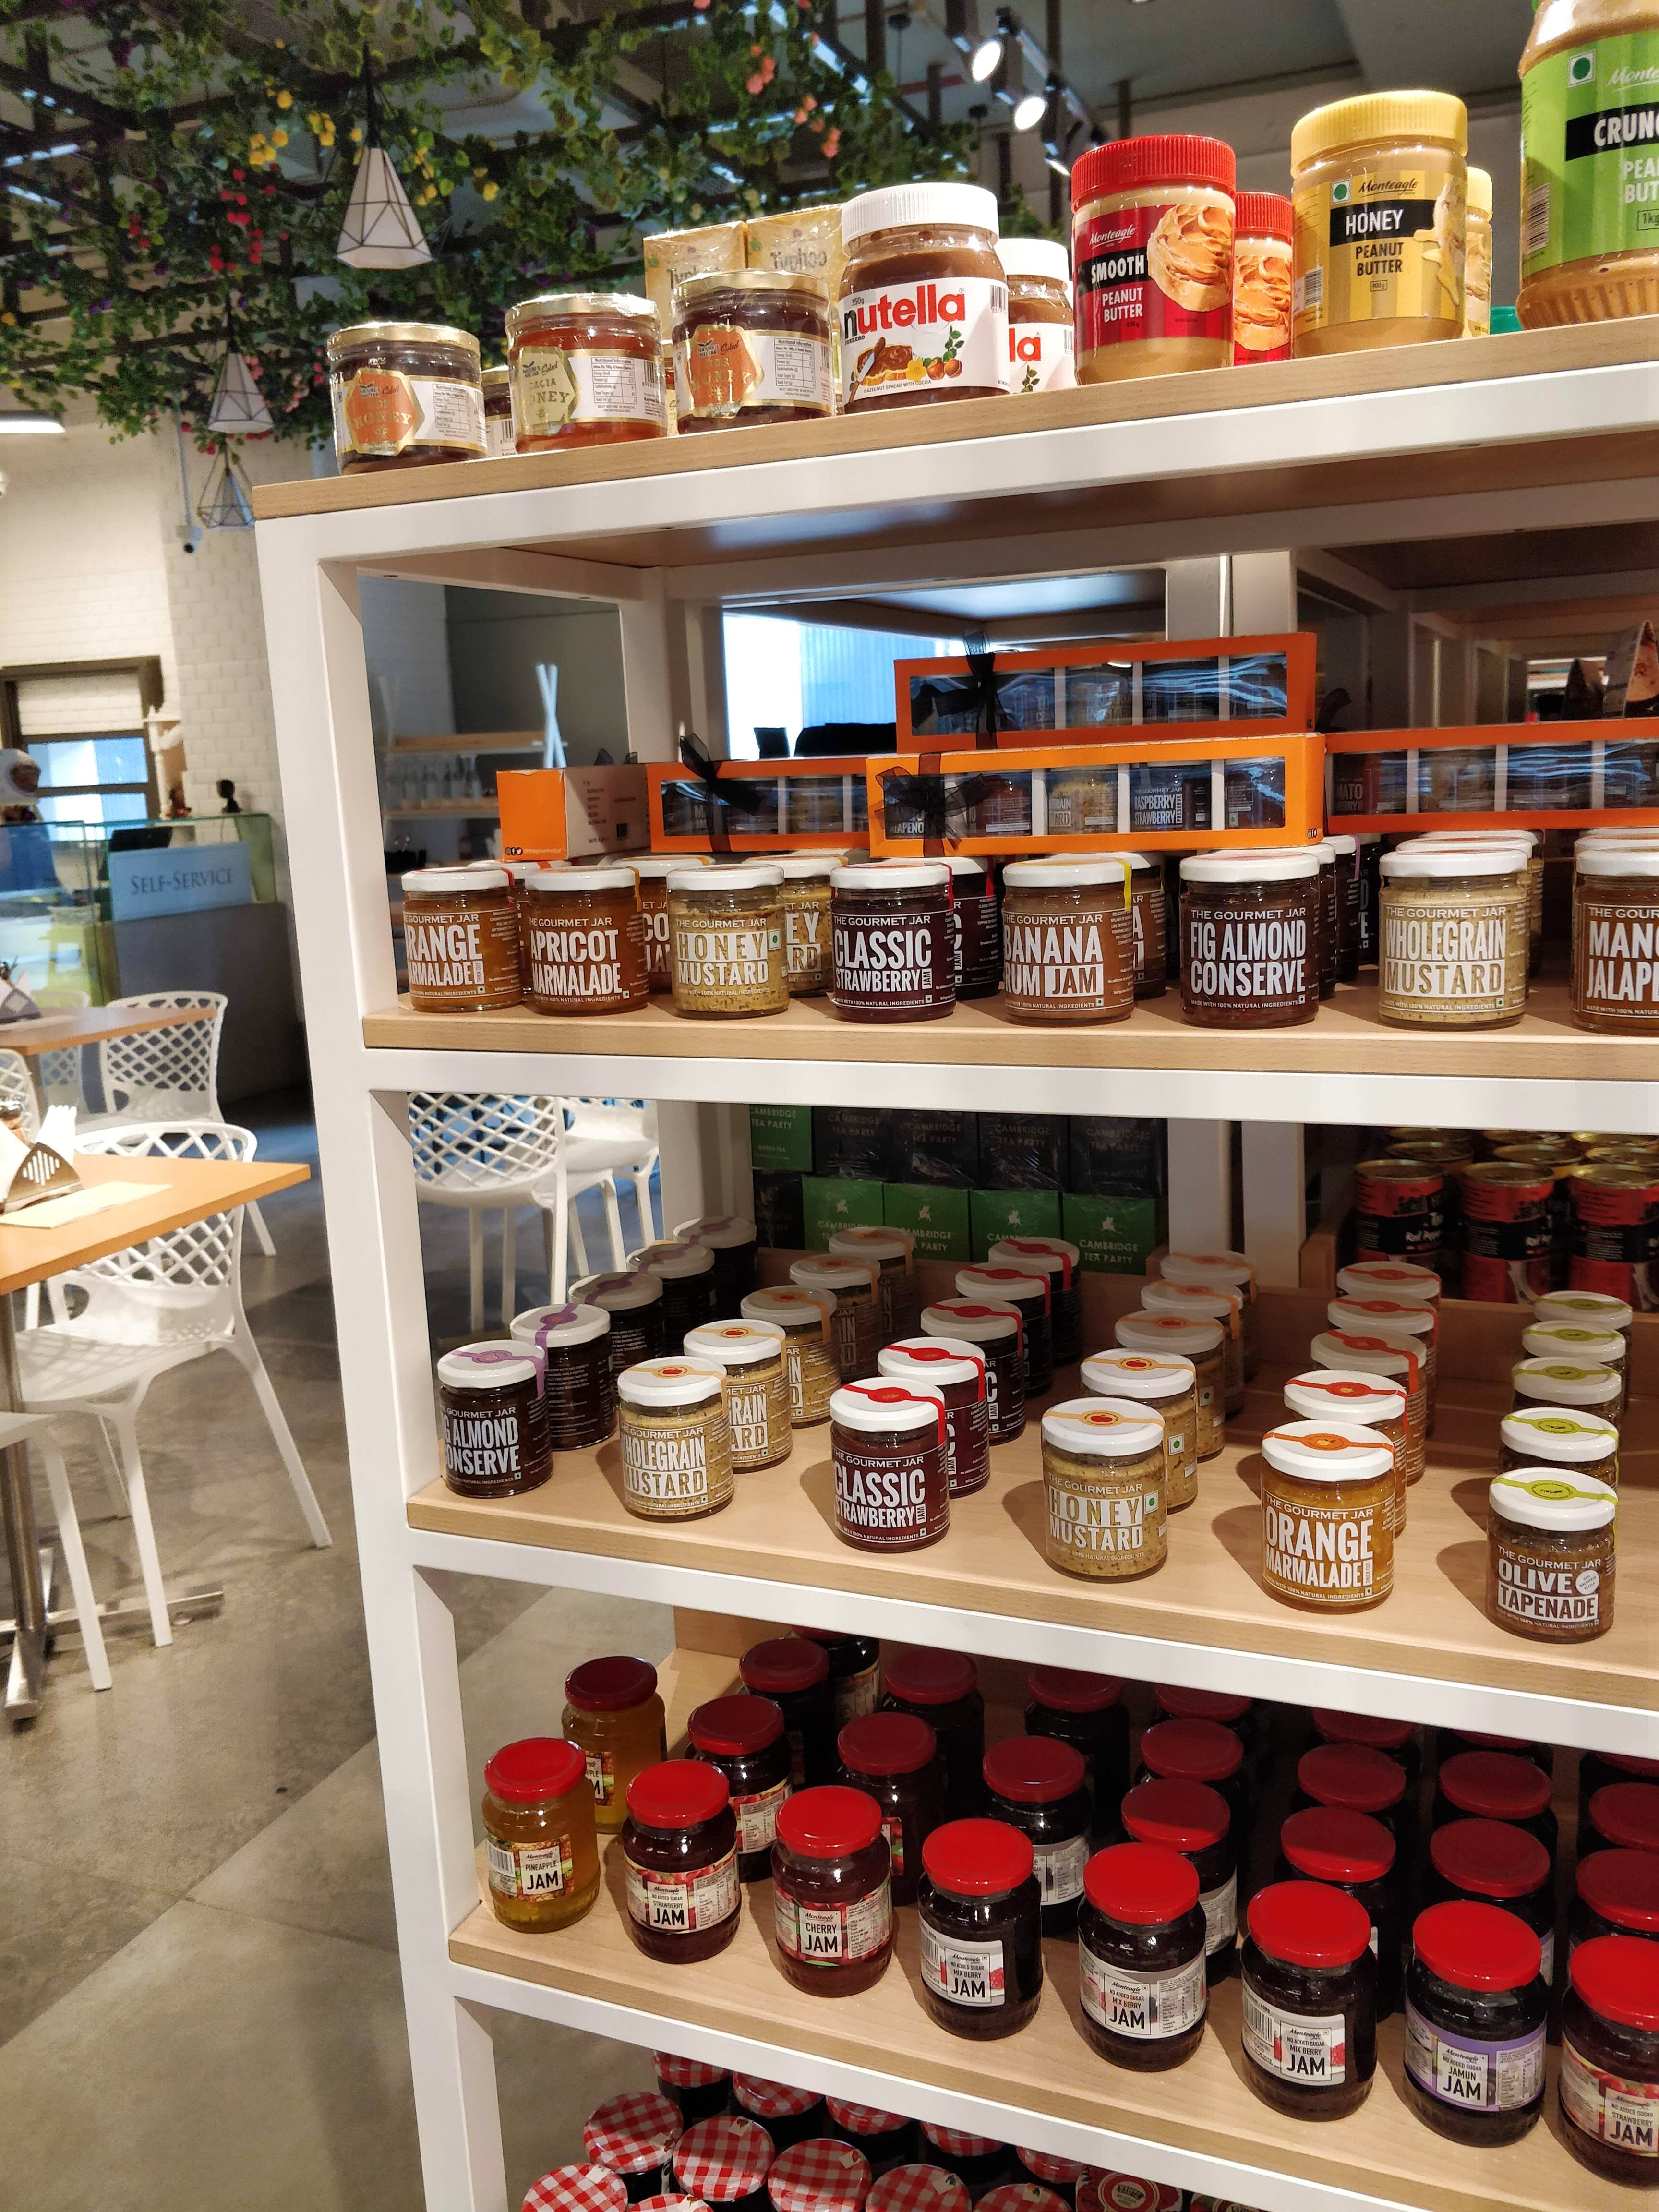 Shelf,Canning,Preserved food,Pantry,Mason jar,Spice rack,Shelving,Convenience food